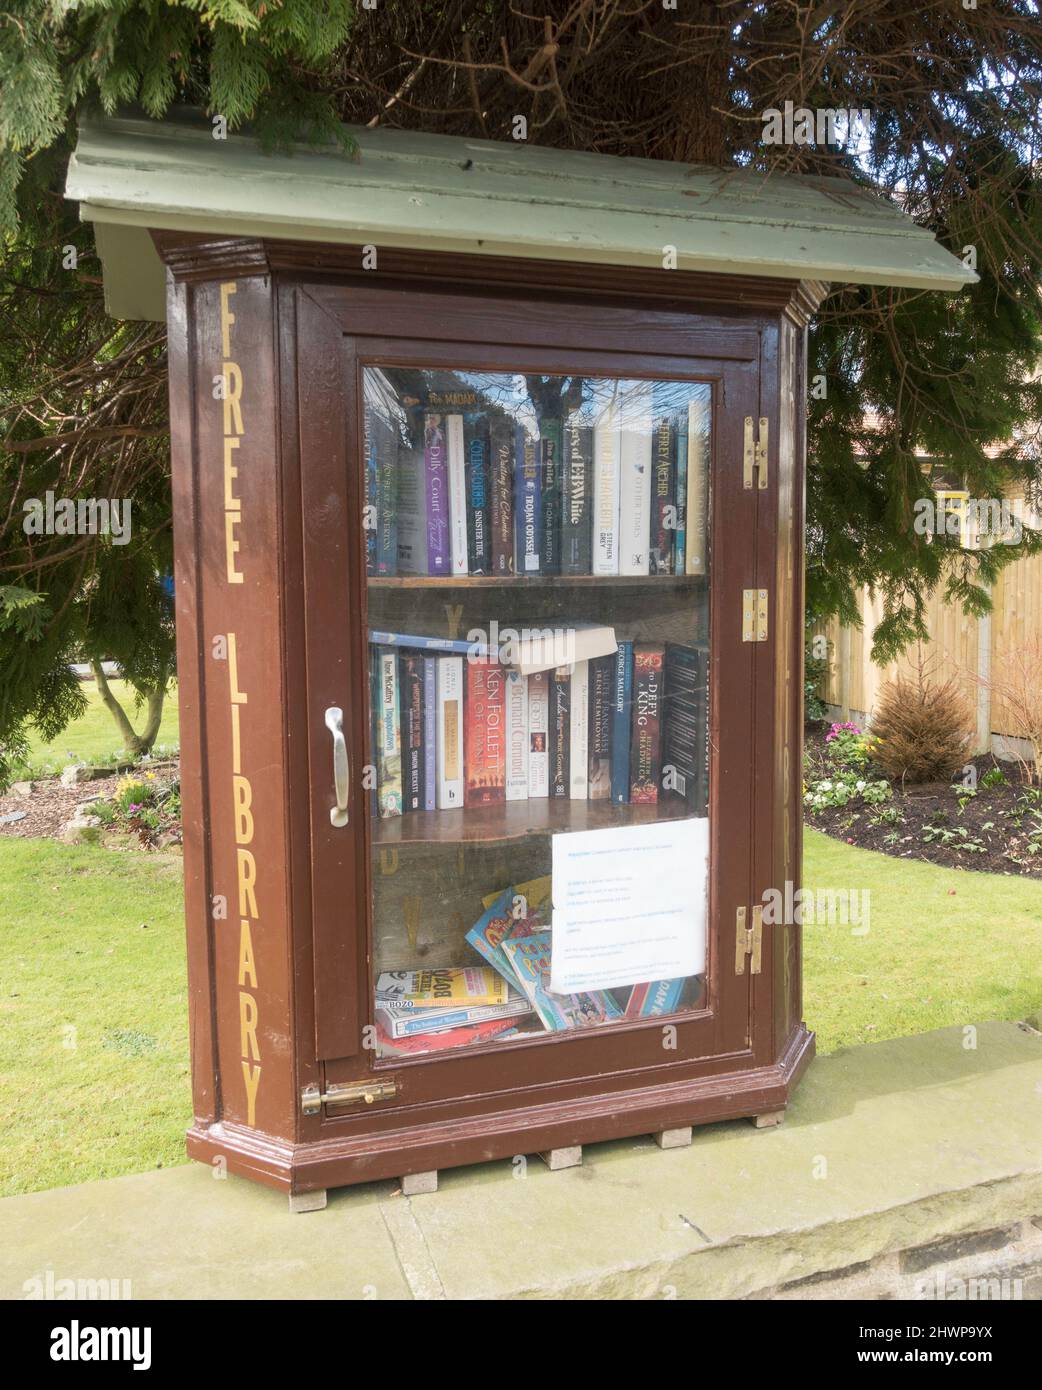 Roundhay community library book exchange box, Leeds, England, UK Stock Photo